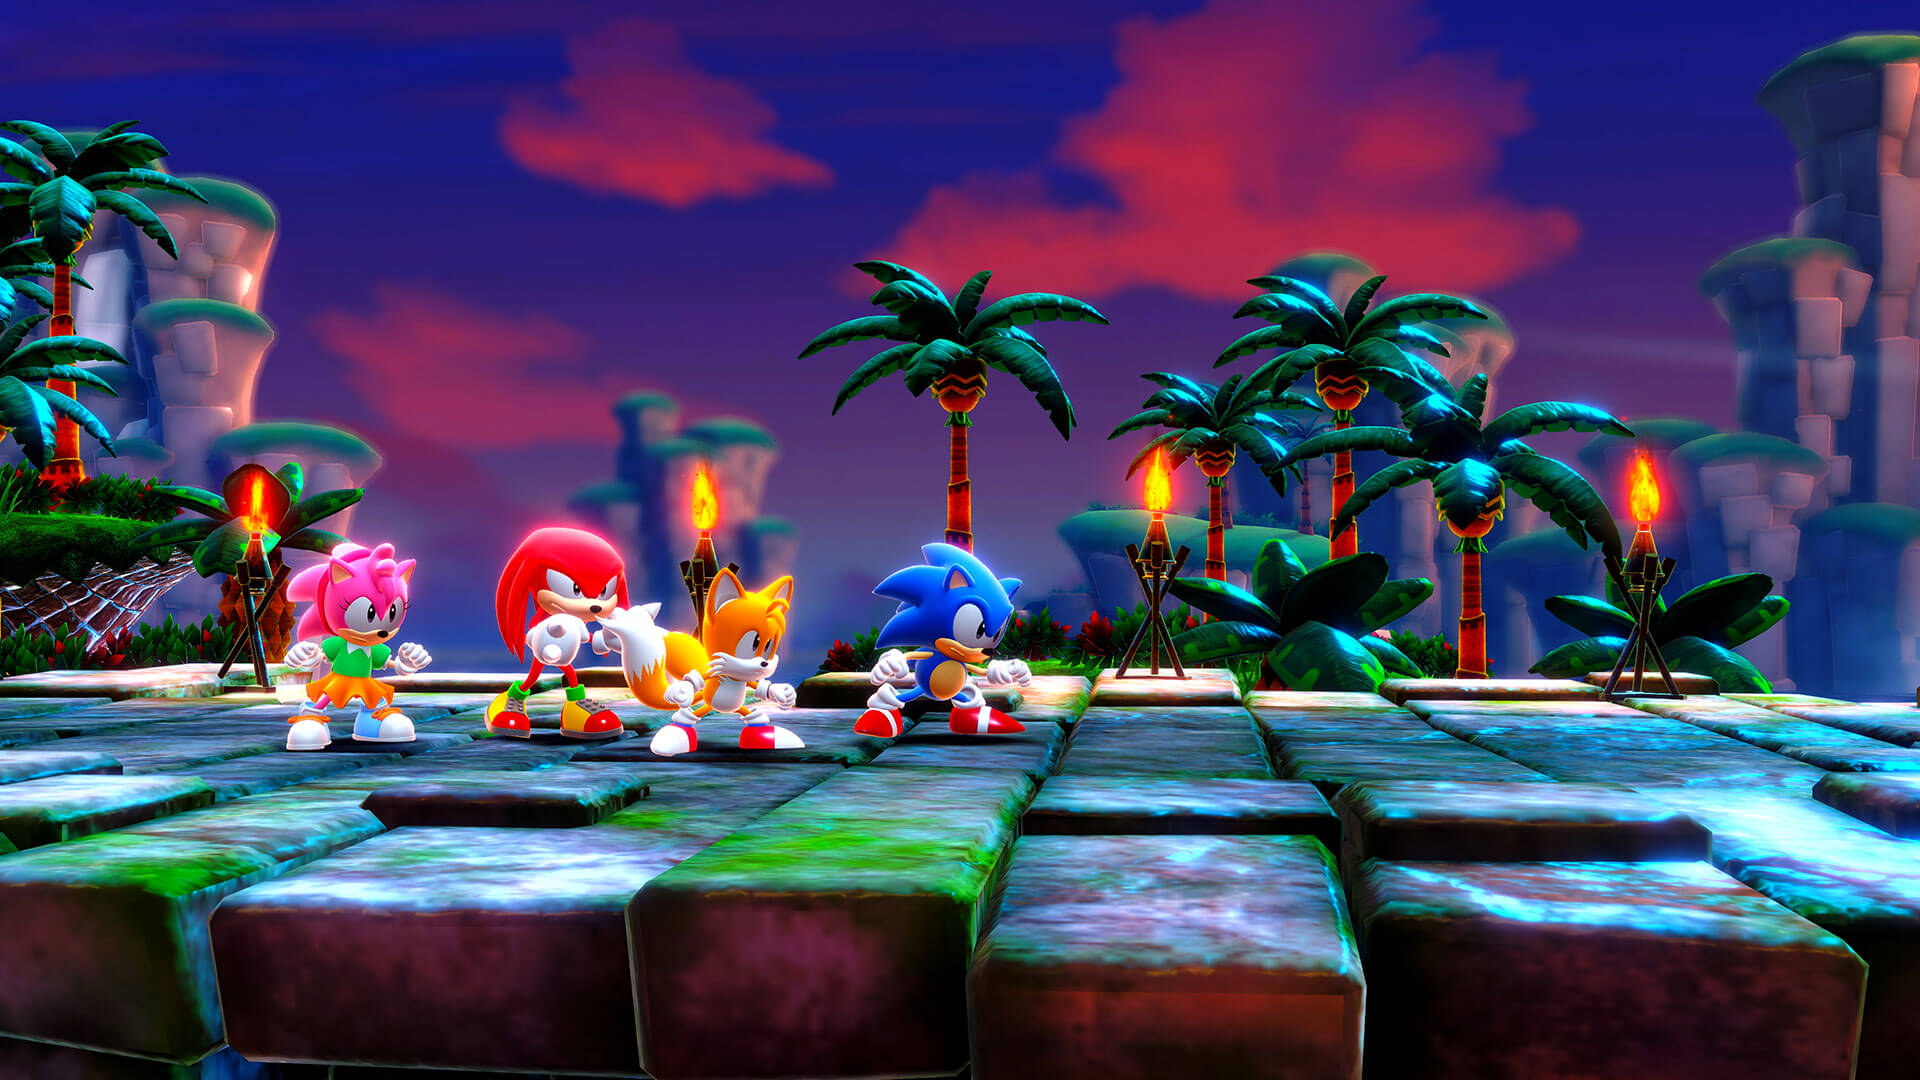 On a joué à Sonic Superstars en duo, rien ne sert de courir ? - Test et  News - Xbox Mag